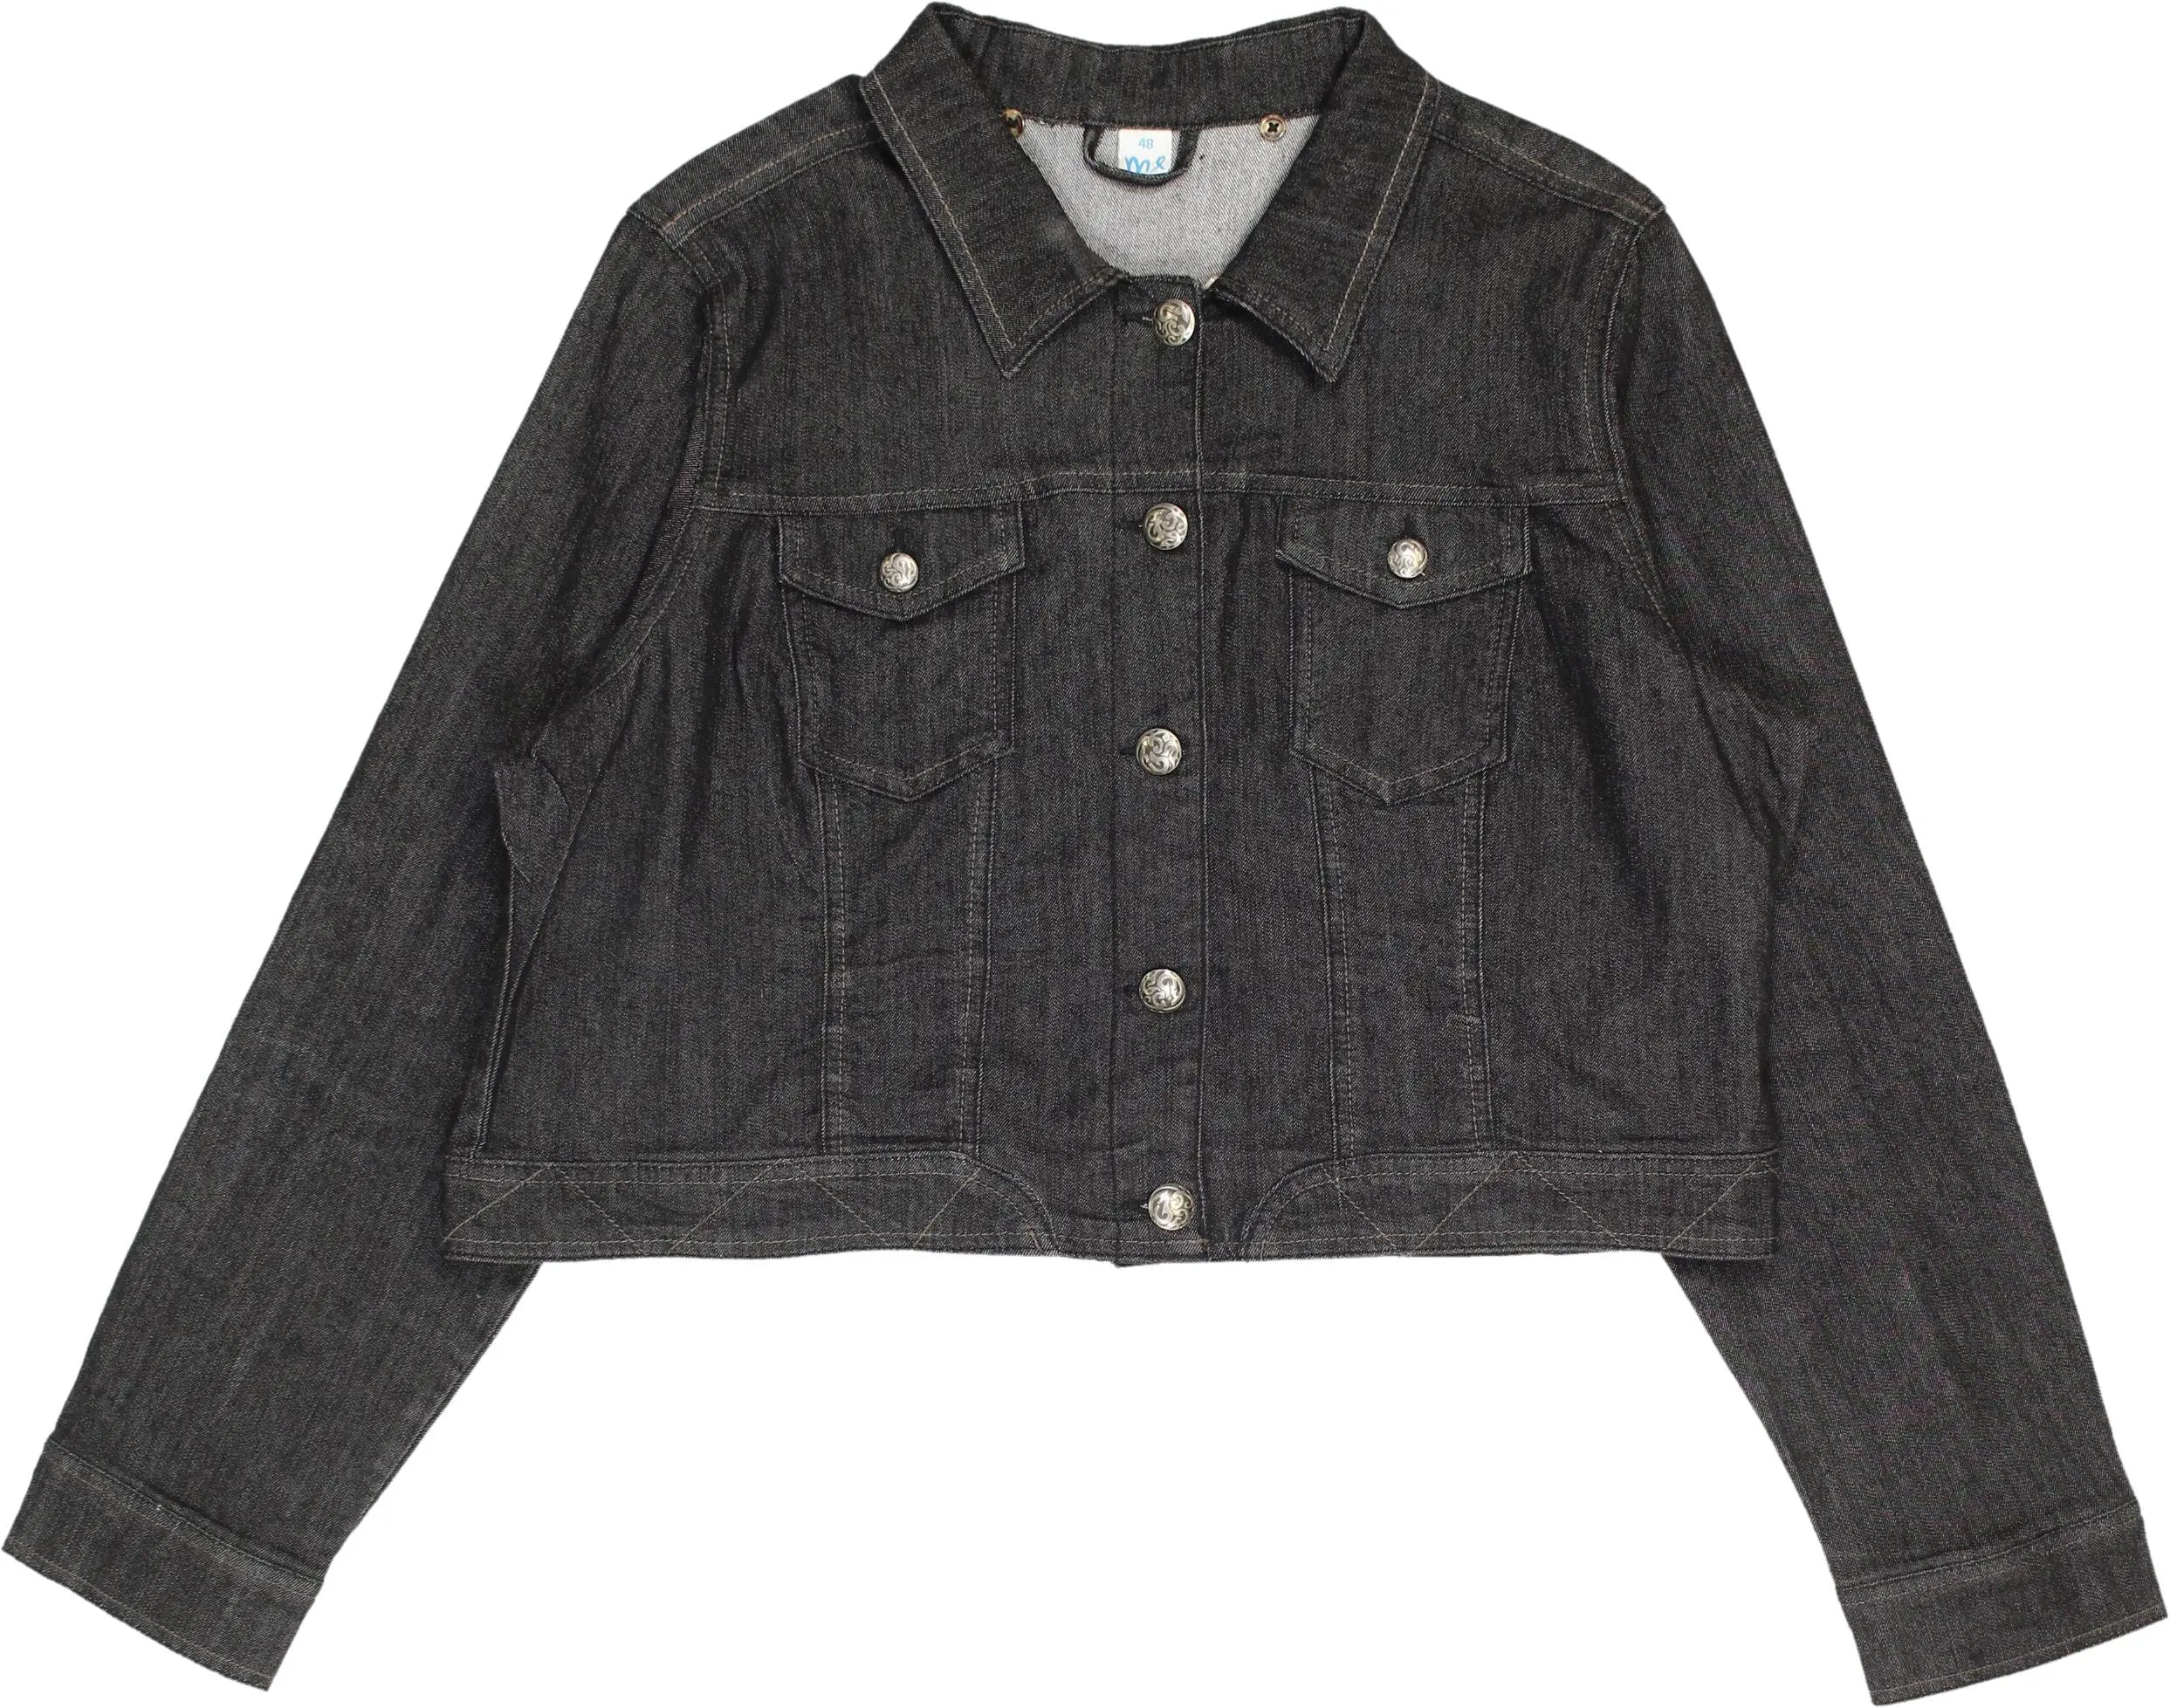 M&S - Denim Jacket- ThriftTale.com - Vintage and second handclothing